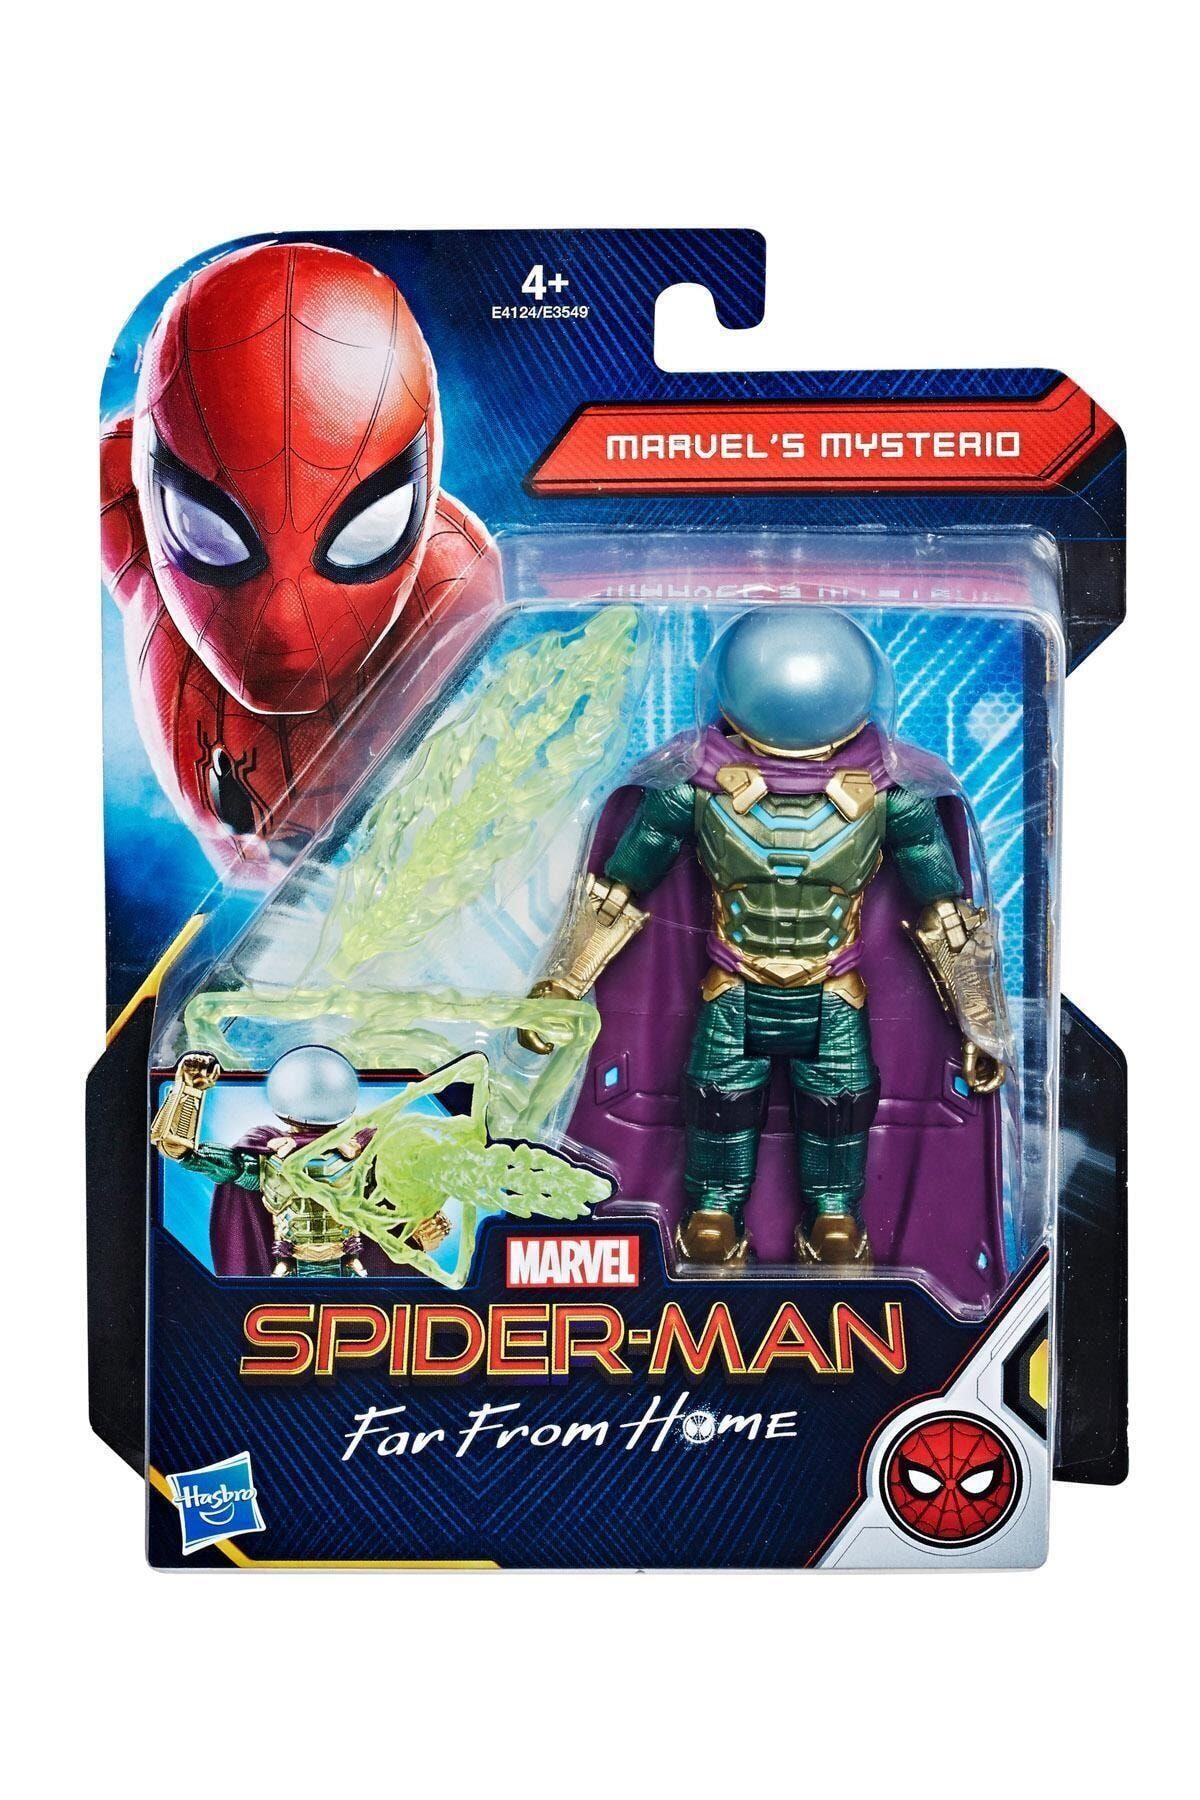 Spiderman Spider Man Far From Home Figür Marvel'S Mysterio E3549-E4124